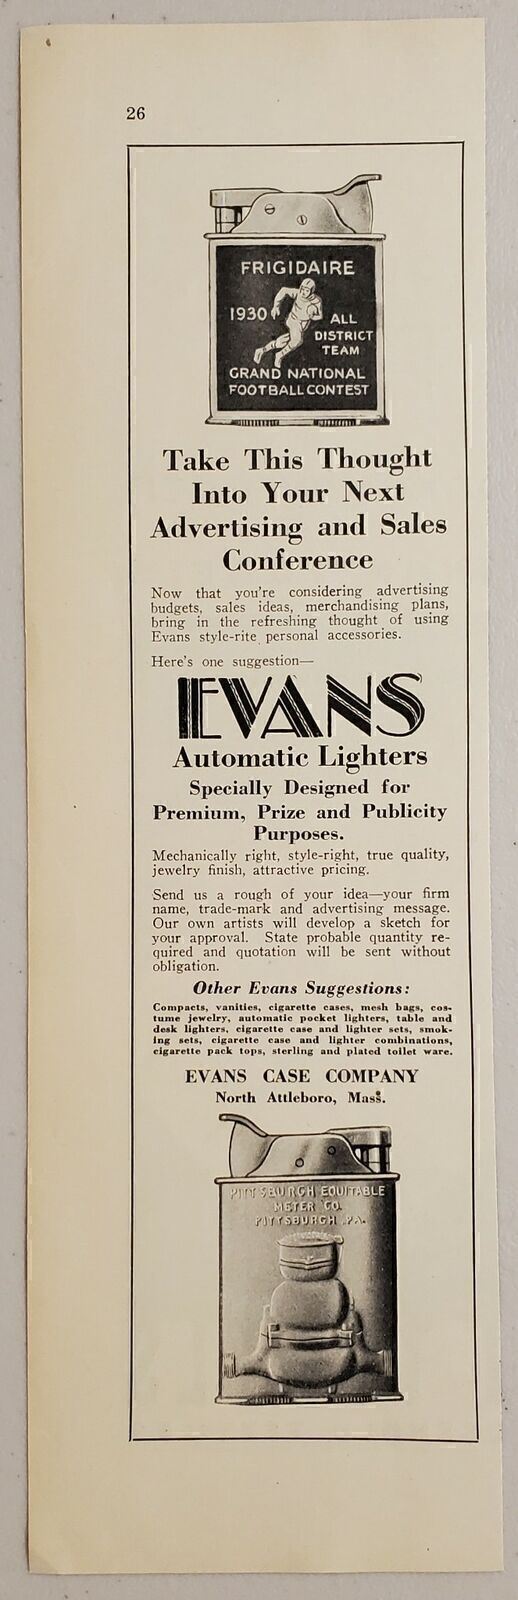 1931 Print Ad Evans Automatic Lighters Advertising North Attleboro,Massachusetts